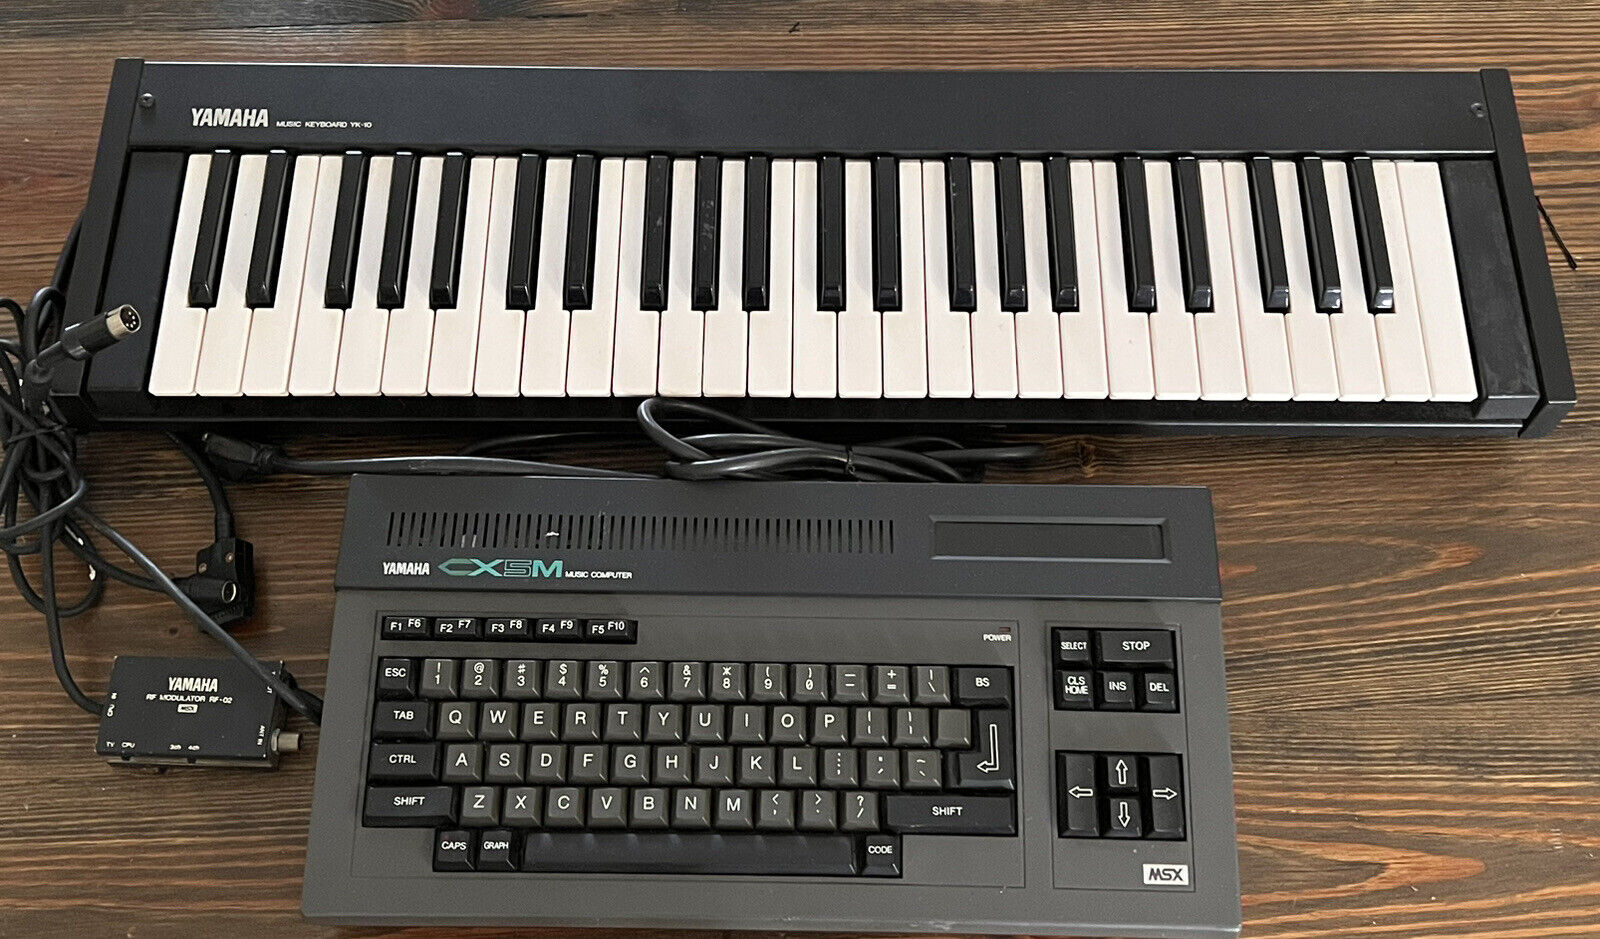 Vintage Yamaha CX5M MSX Music Computer & YK-10 Music Keyboard & RF Modulator